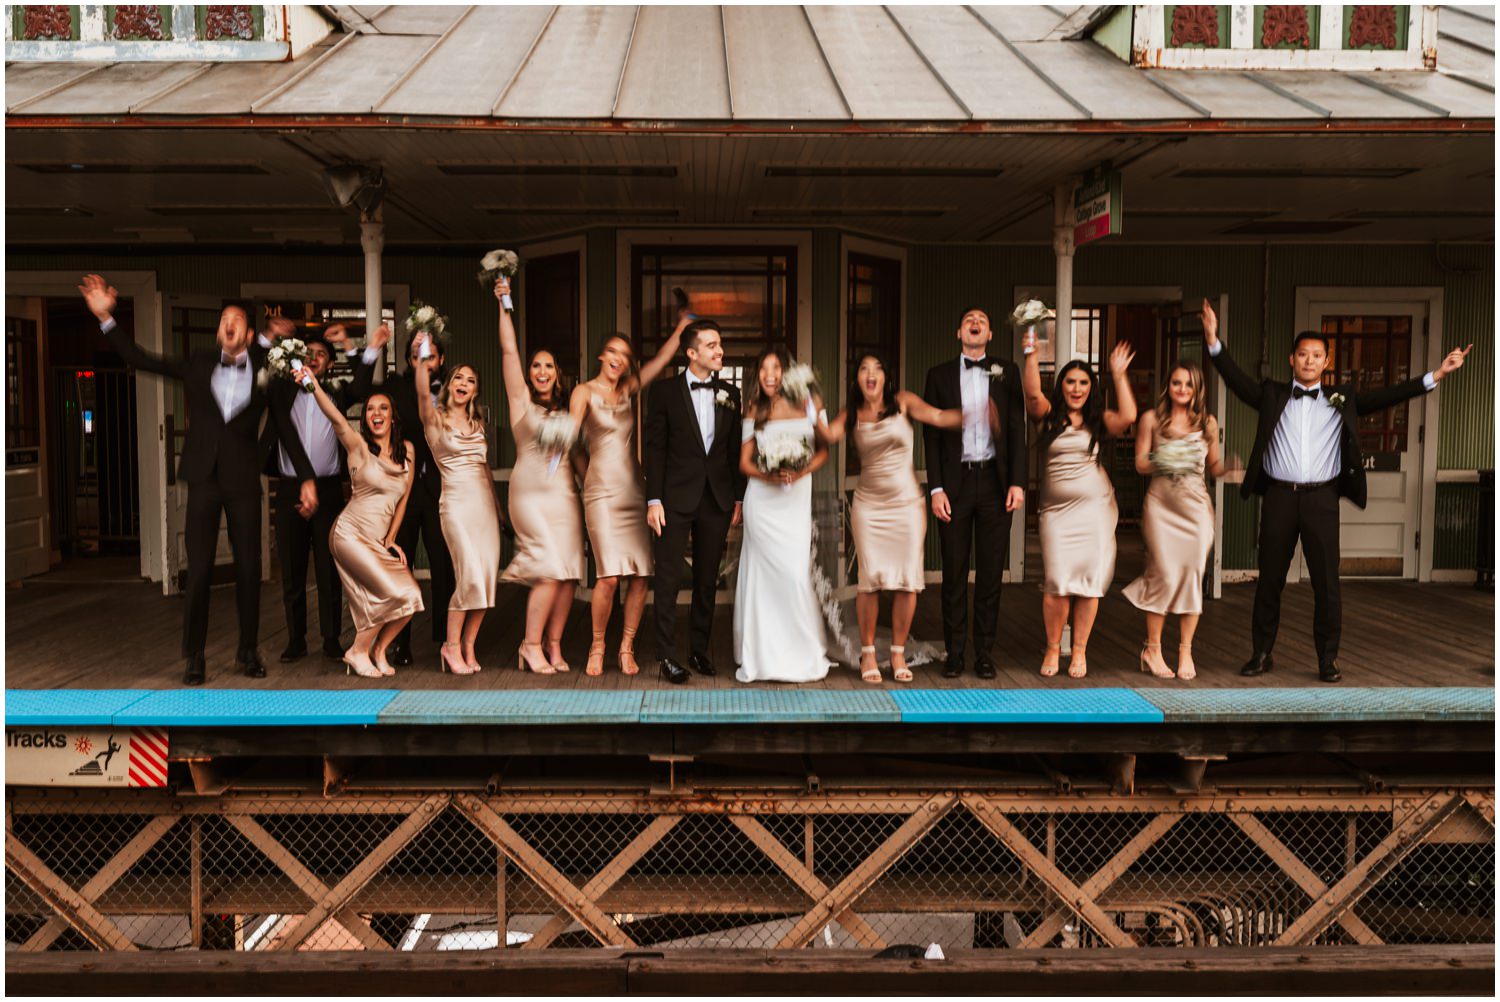 Fairlie Chicago Wedding Photos at the CTA "L" Train